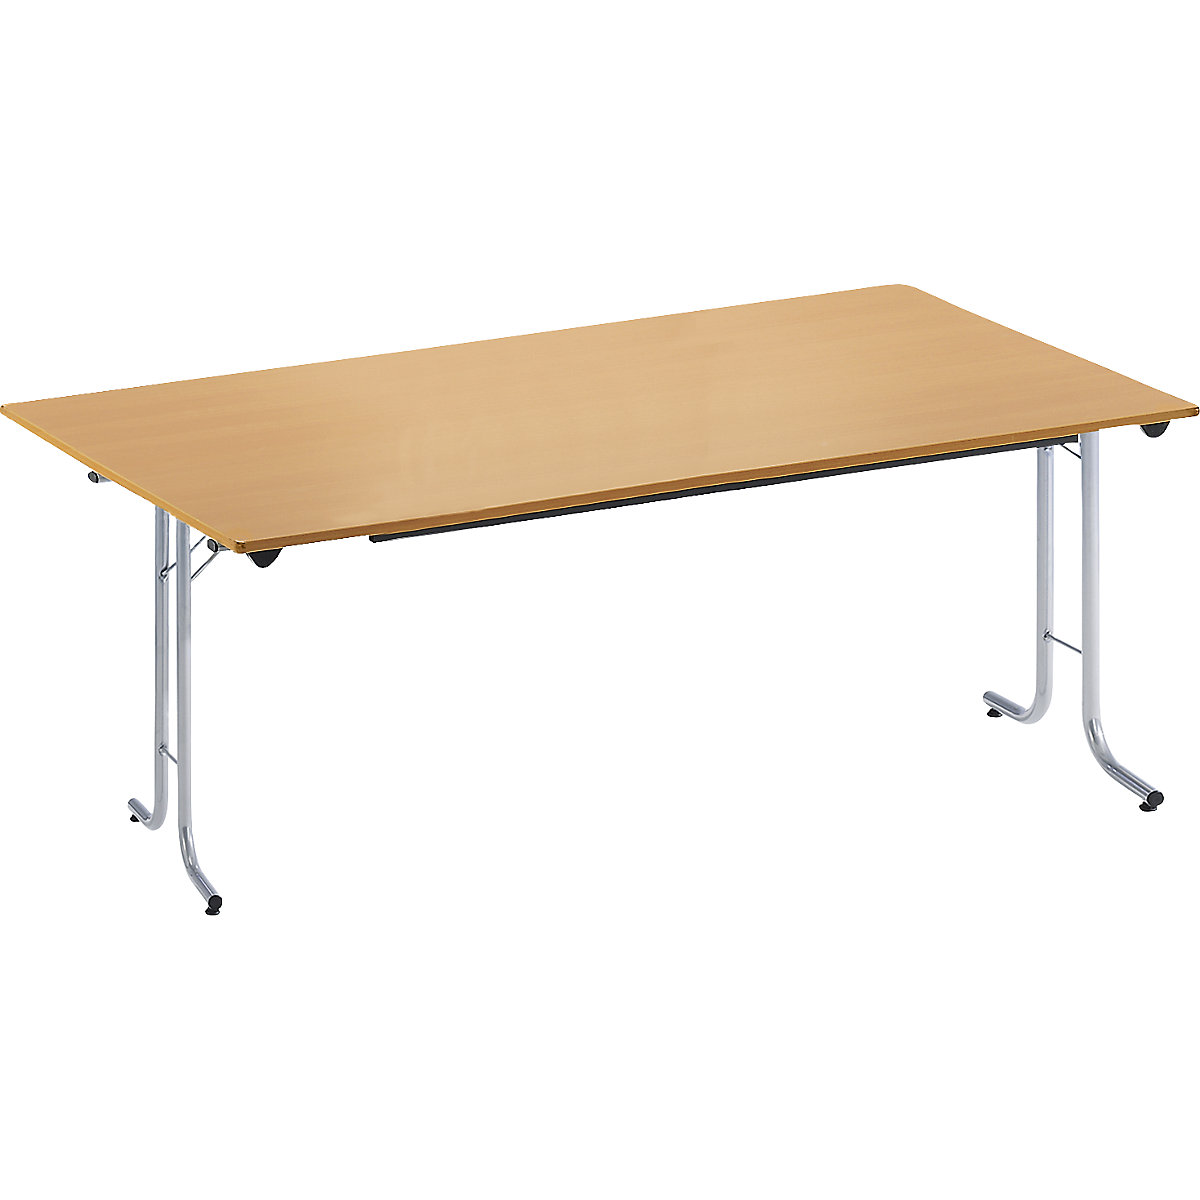 Folding table, with rounded edges, round tubular frame, rectangular top, 1600 x 800 mm, aluminium coloured frame, beech finish tabletop-7